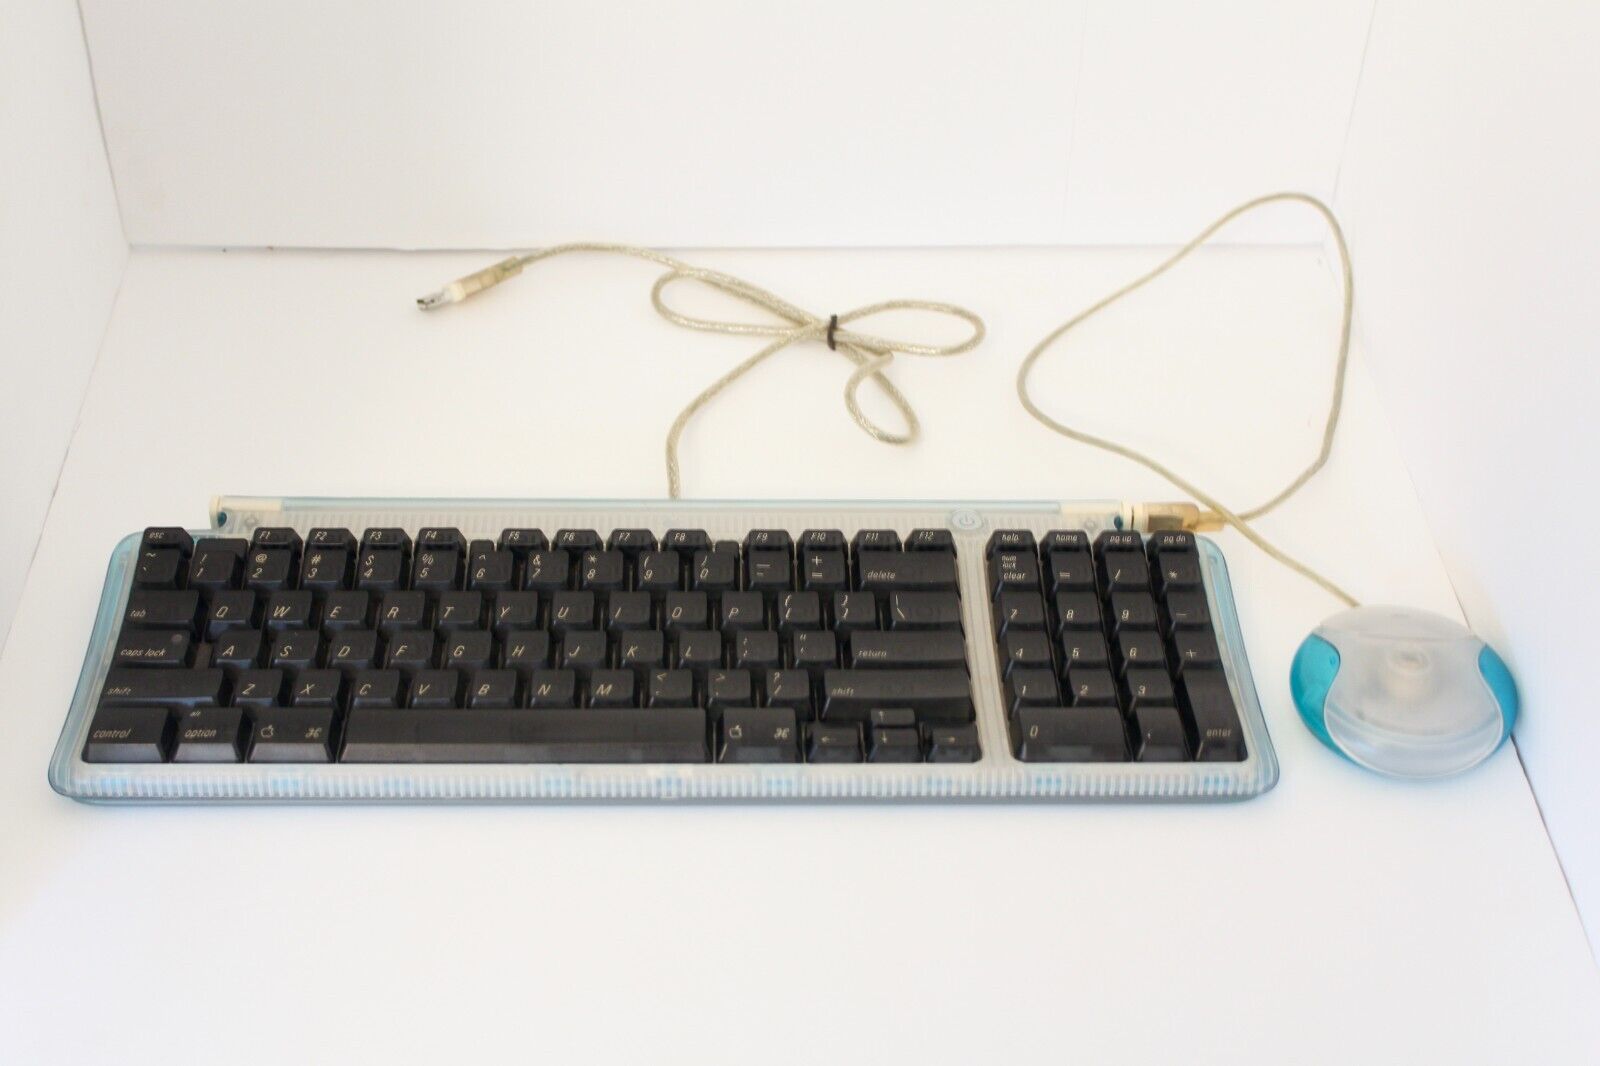 Vintage Apple Keyboard & Mouse Translucent Blue M2452/M4848 Good Condition